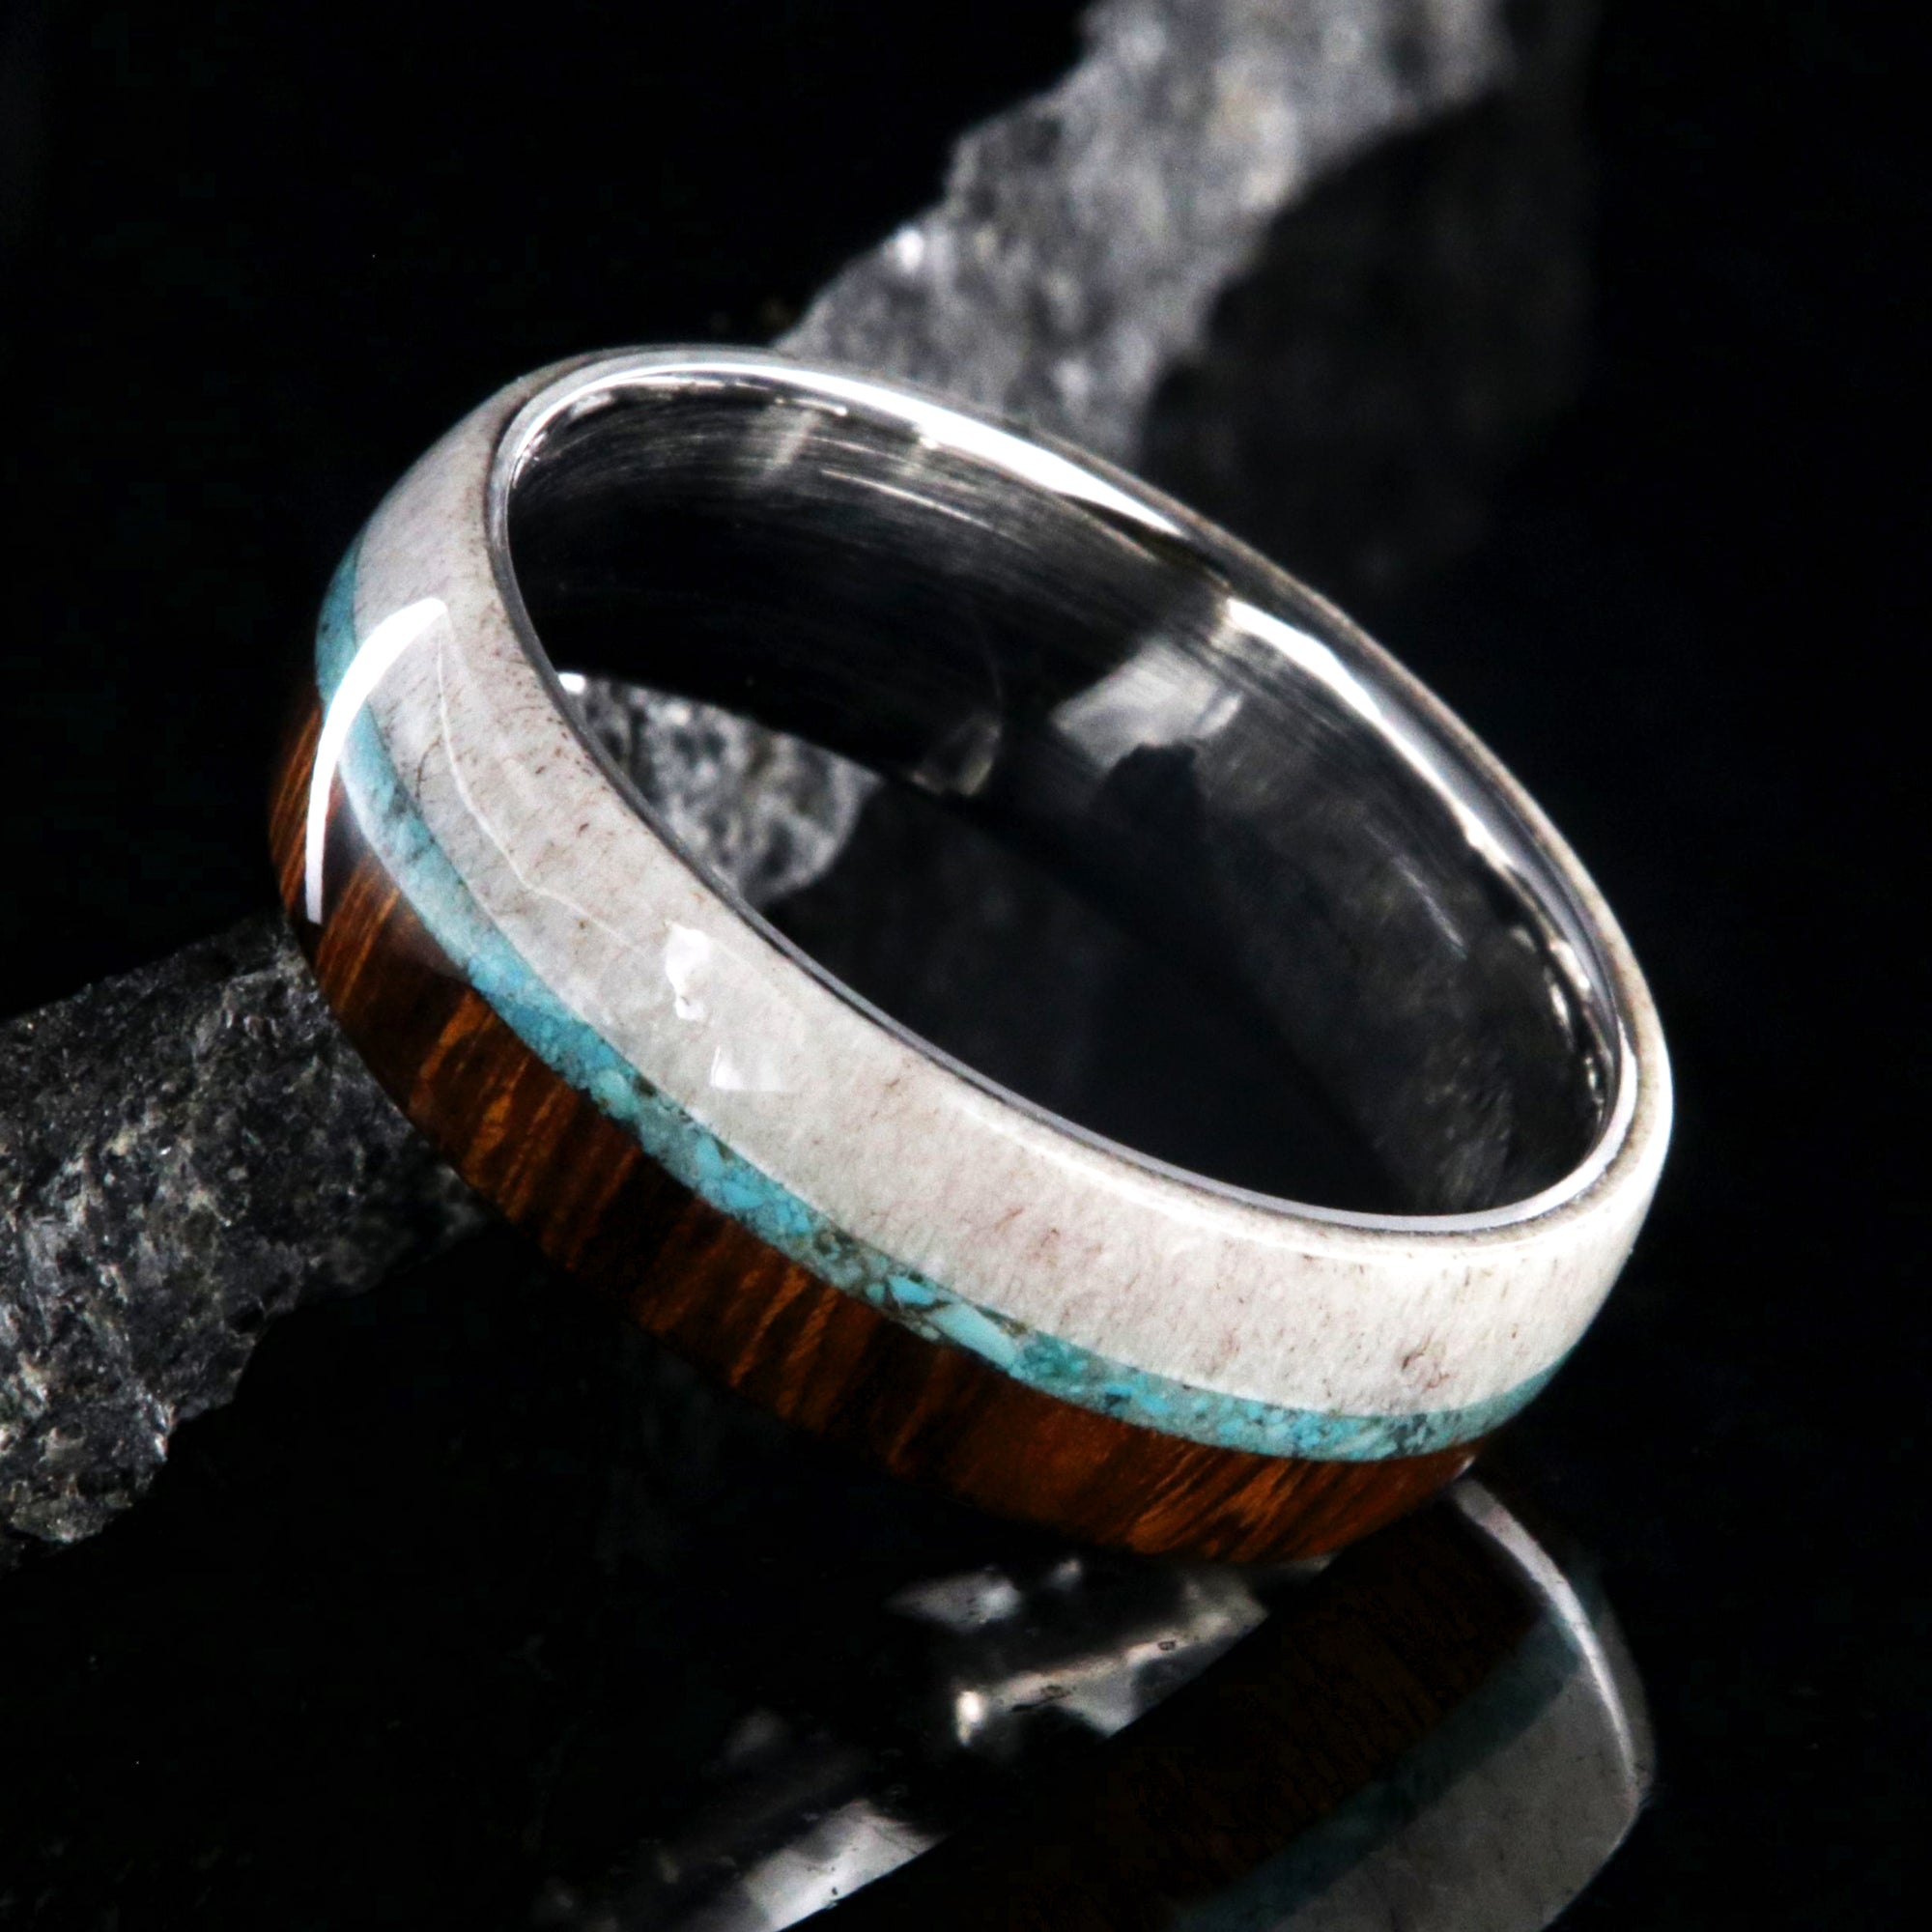 7mm wide half antler and half Arizona ironwood wedding ring with thin turquoise inlay